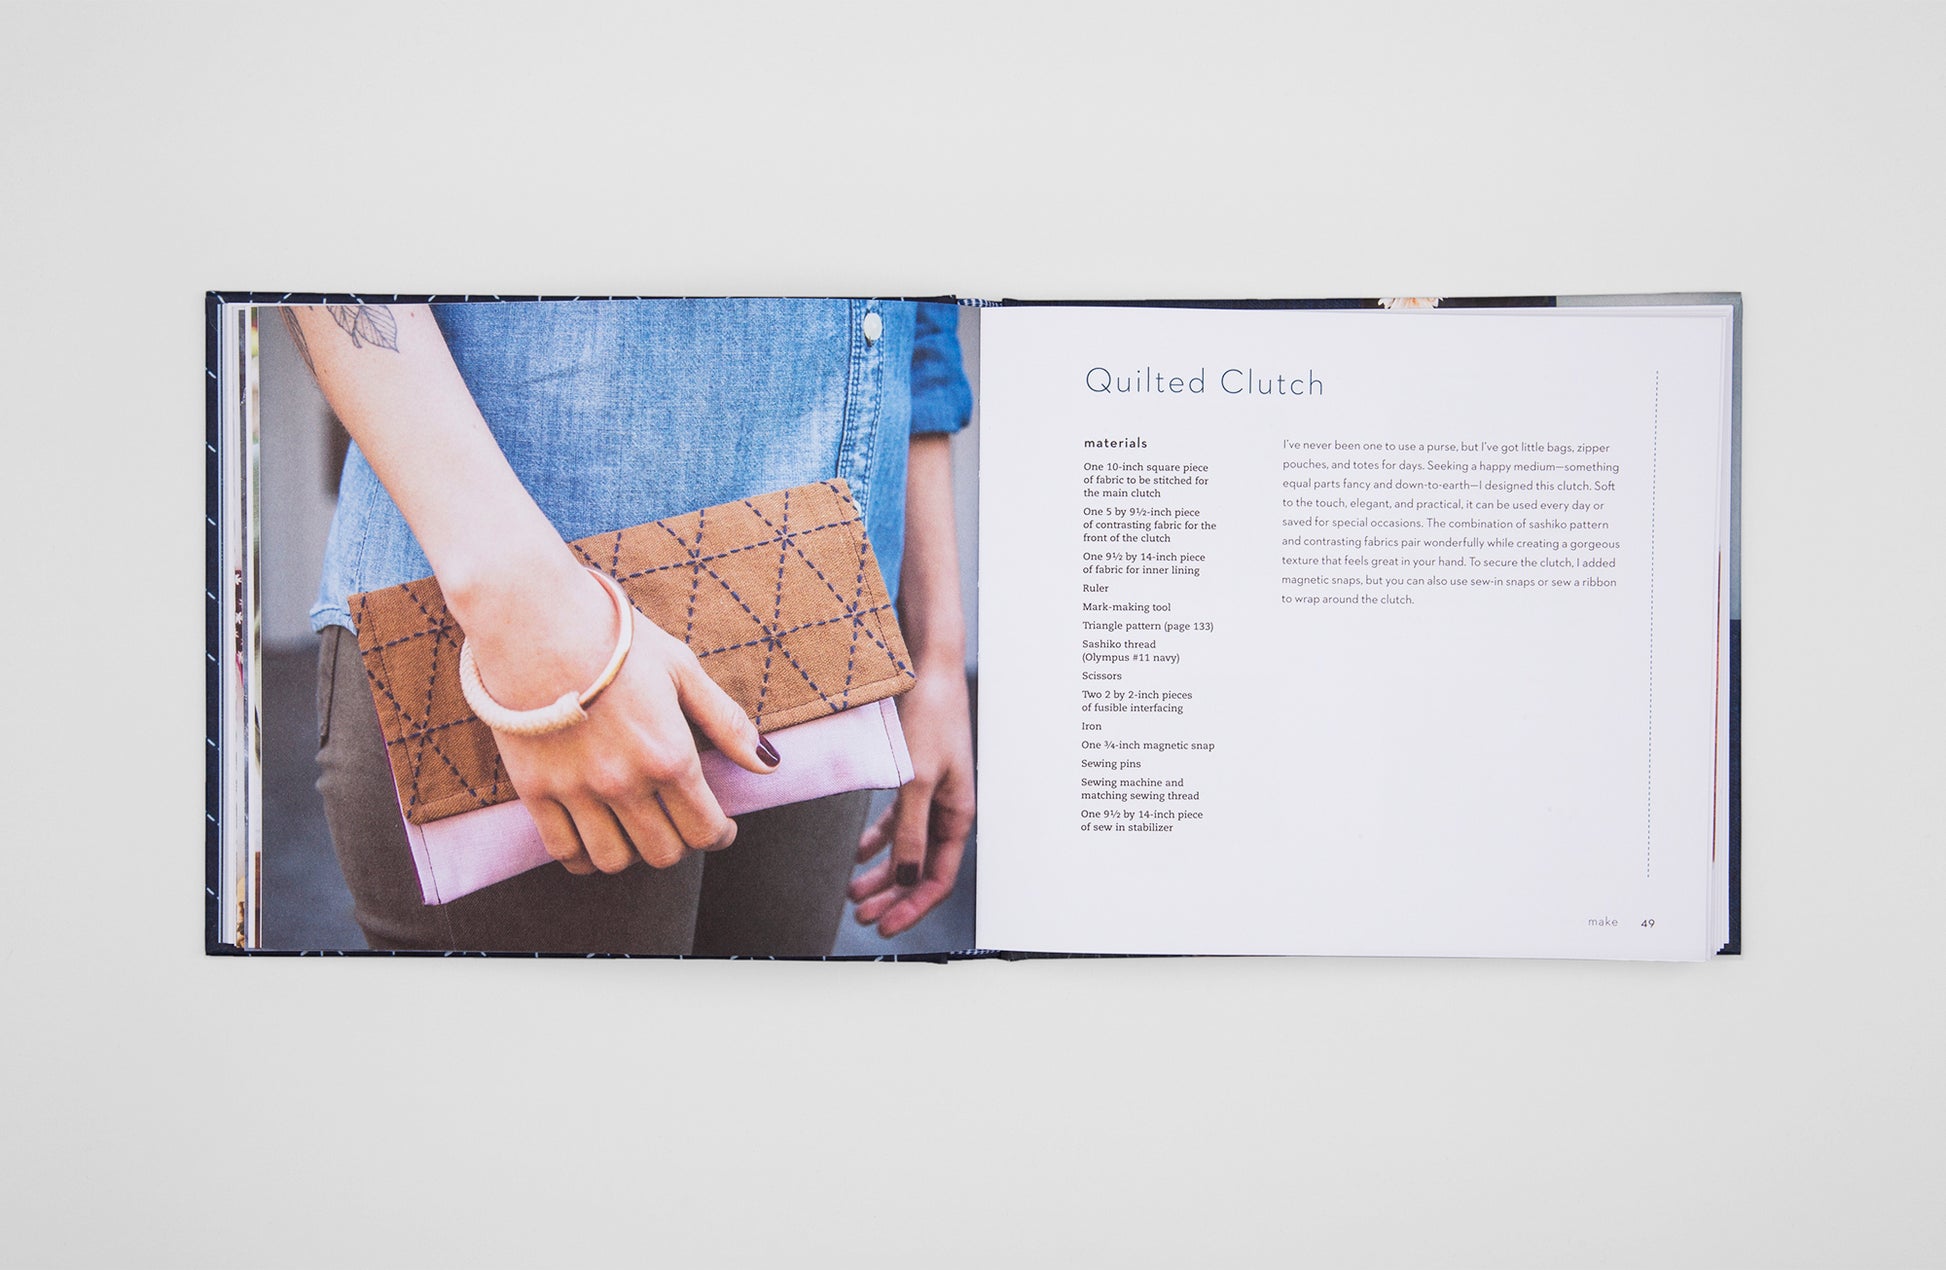 Sashiko Mending Kit a DIY Guide to Decorative, Functional Patching